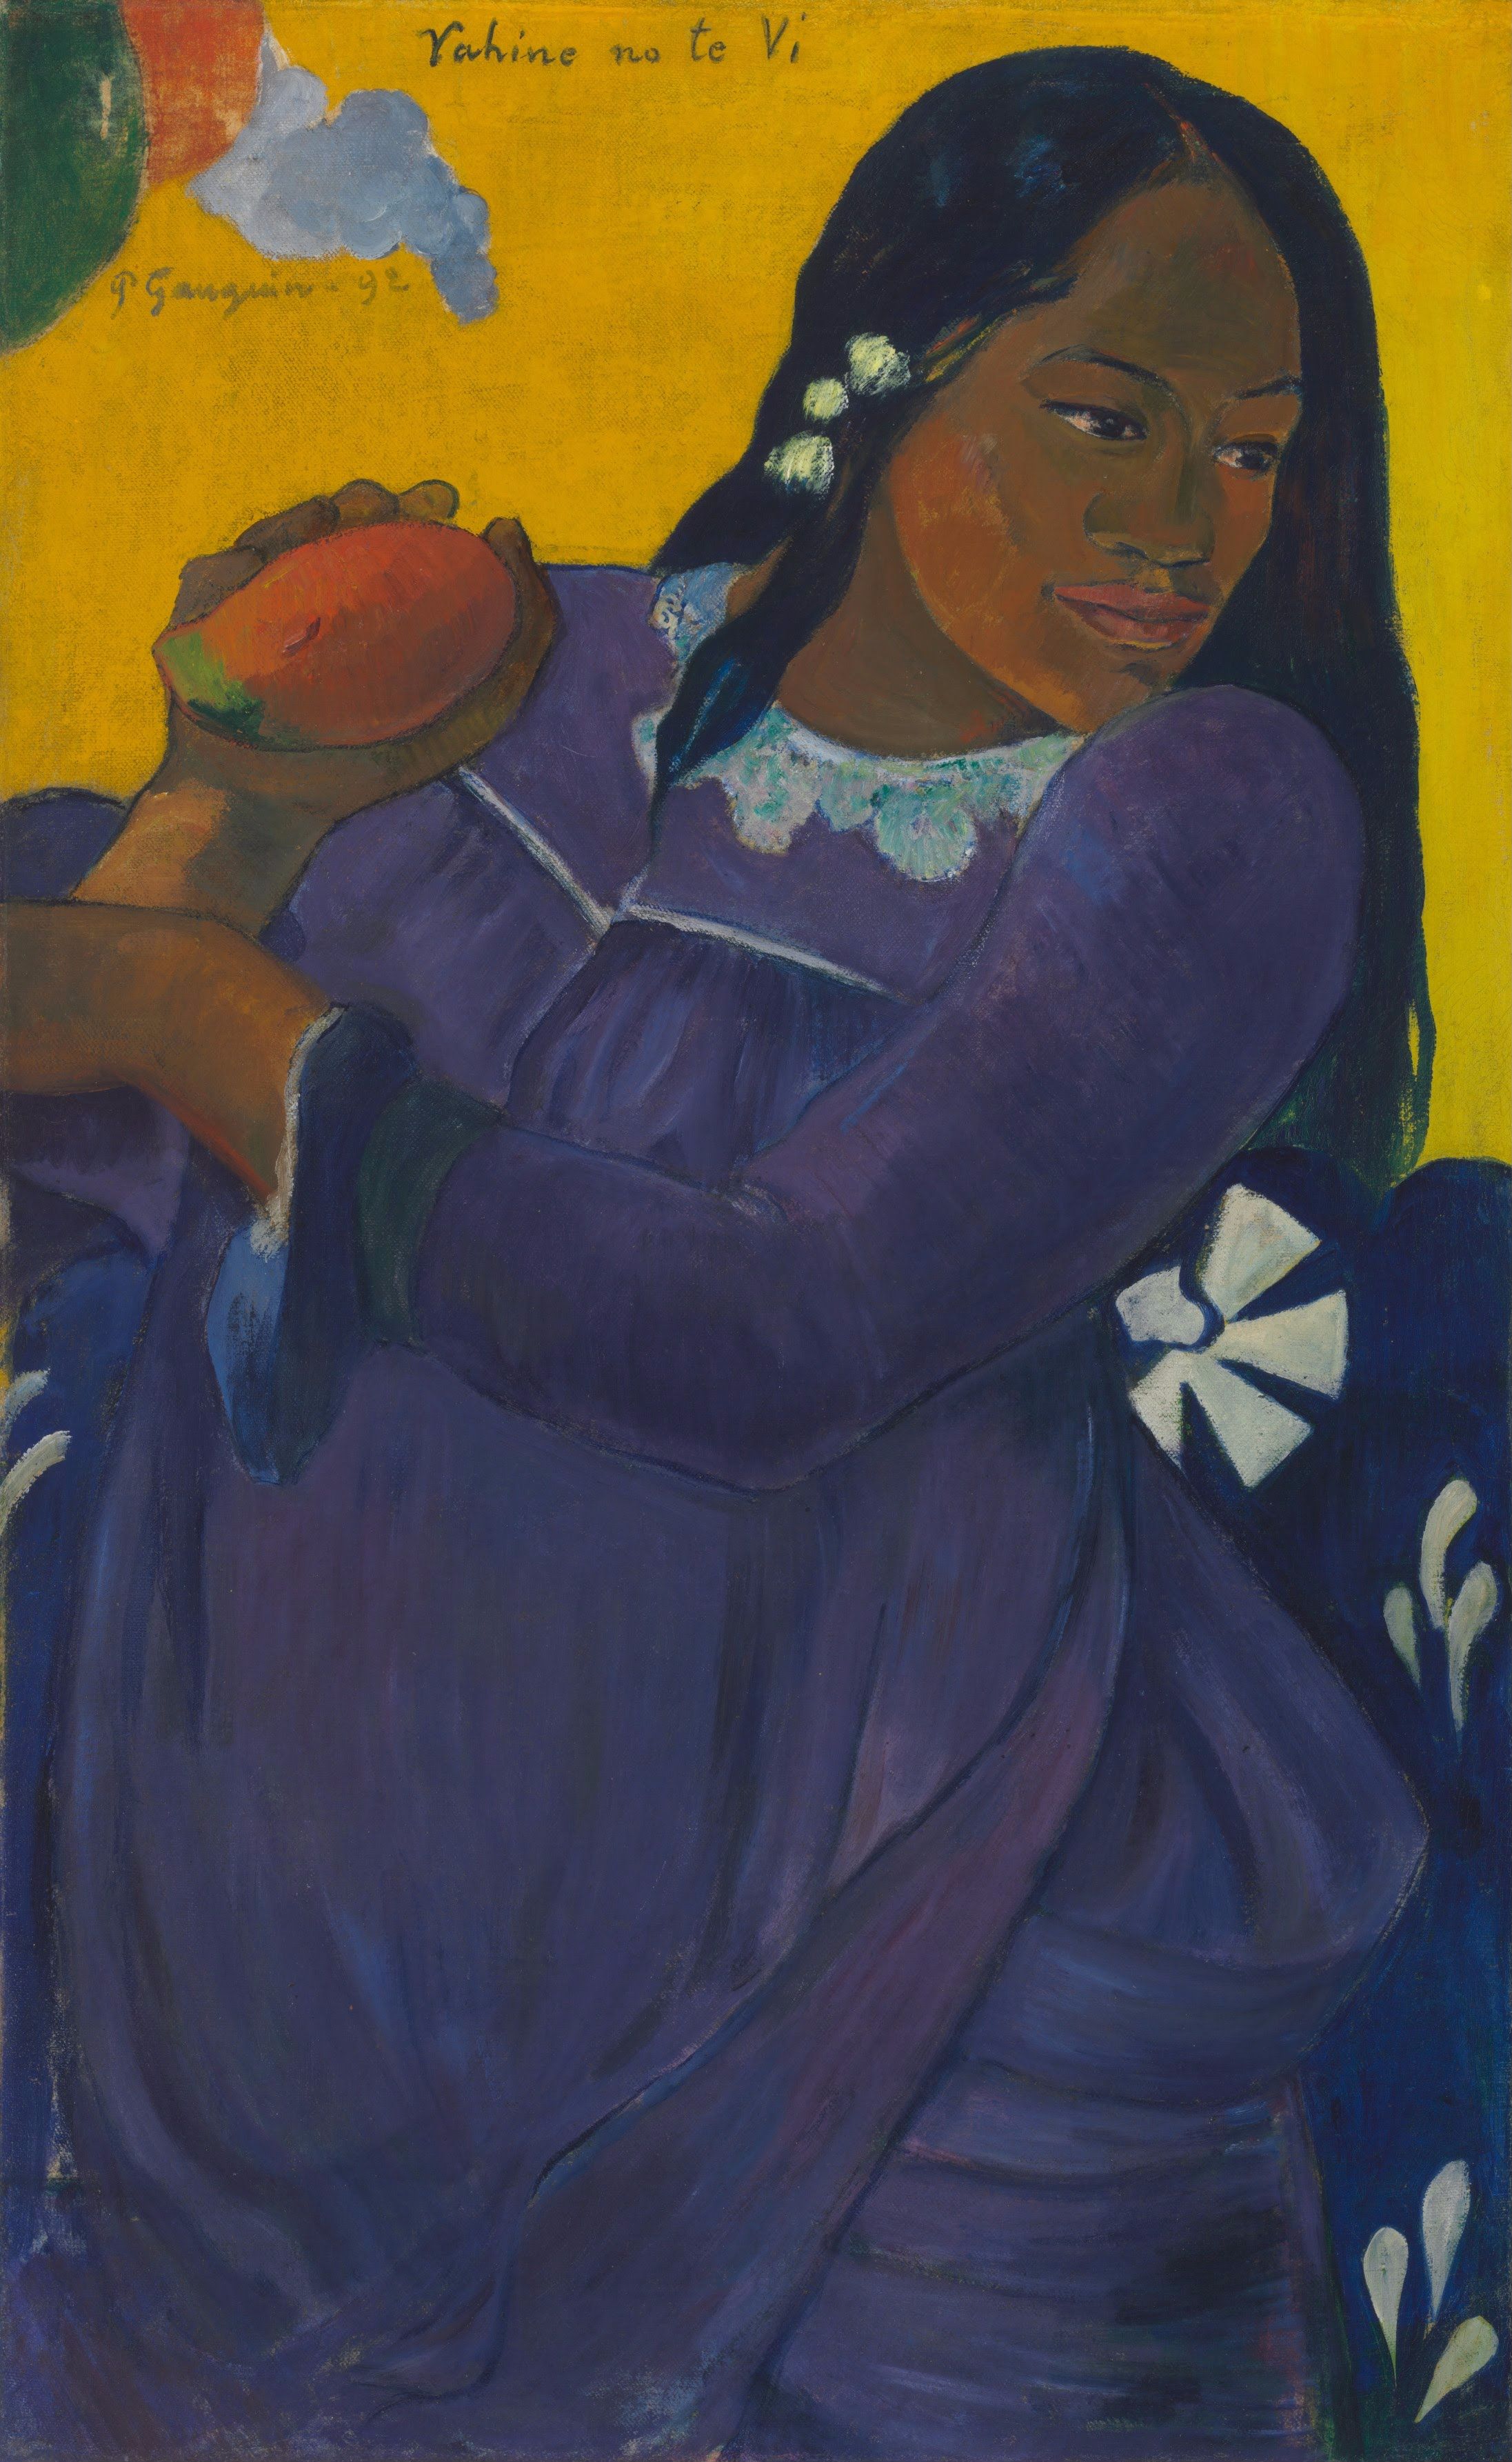 Vahine no te vi (Жінка Манго) by Paul Gauguin - 1892 - 193.5 x 103 см 